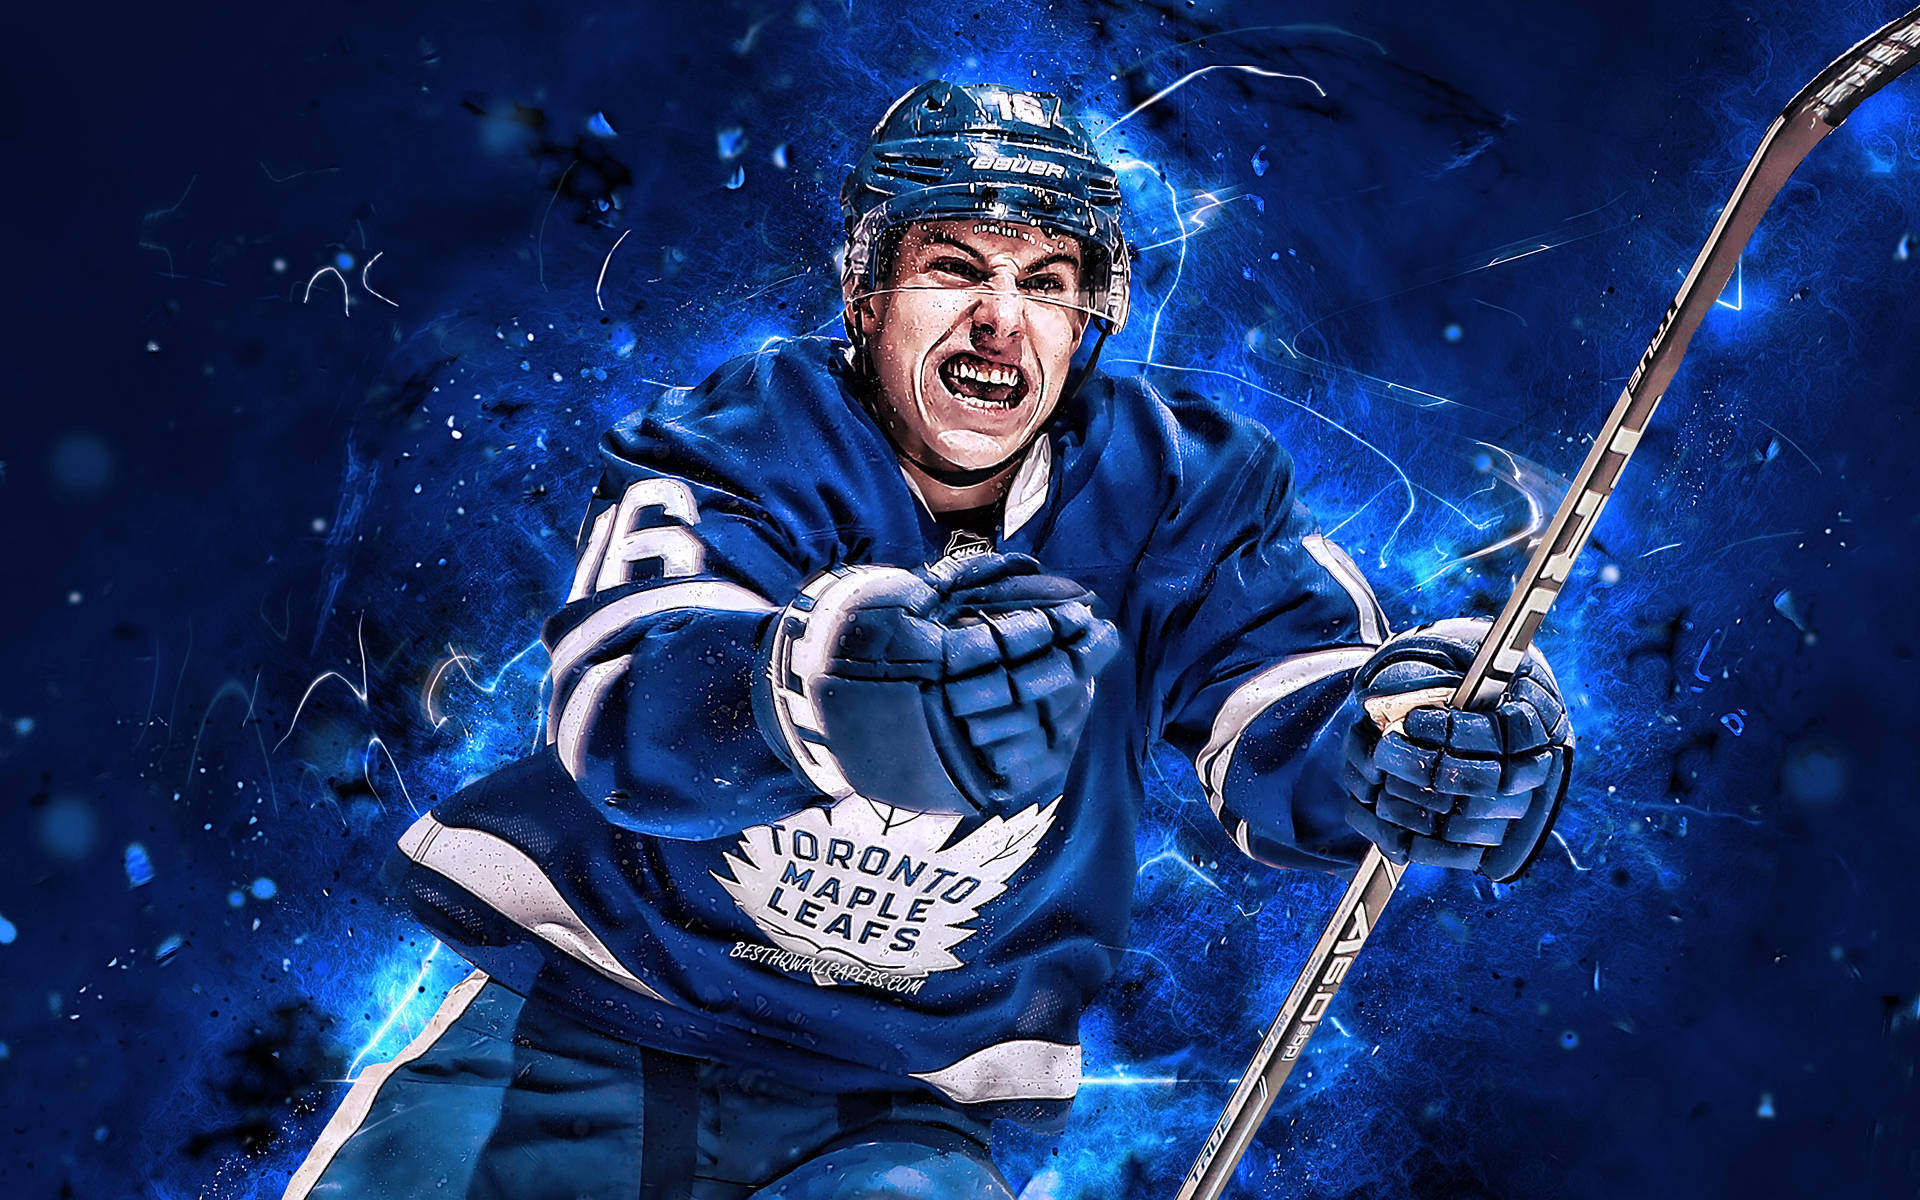 Torontomaple Leafs Spelarblå Konst. Wallpaper